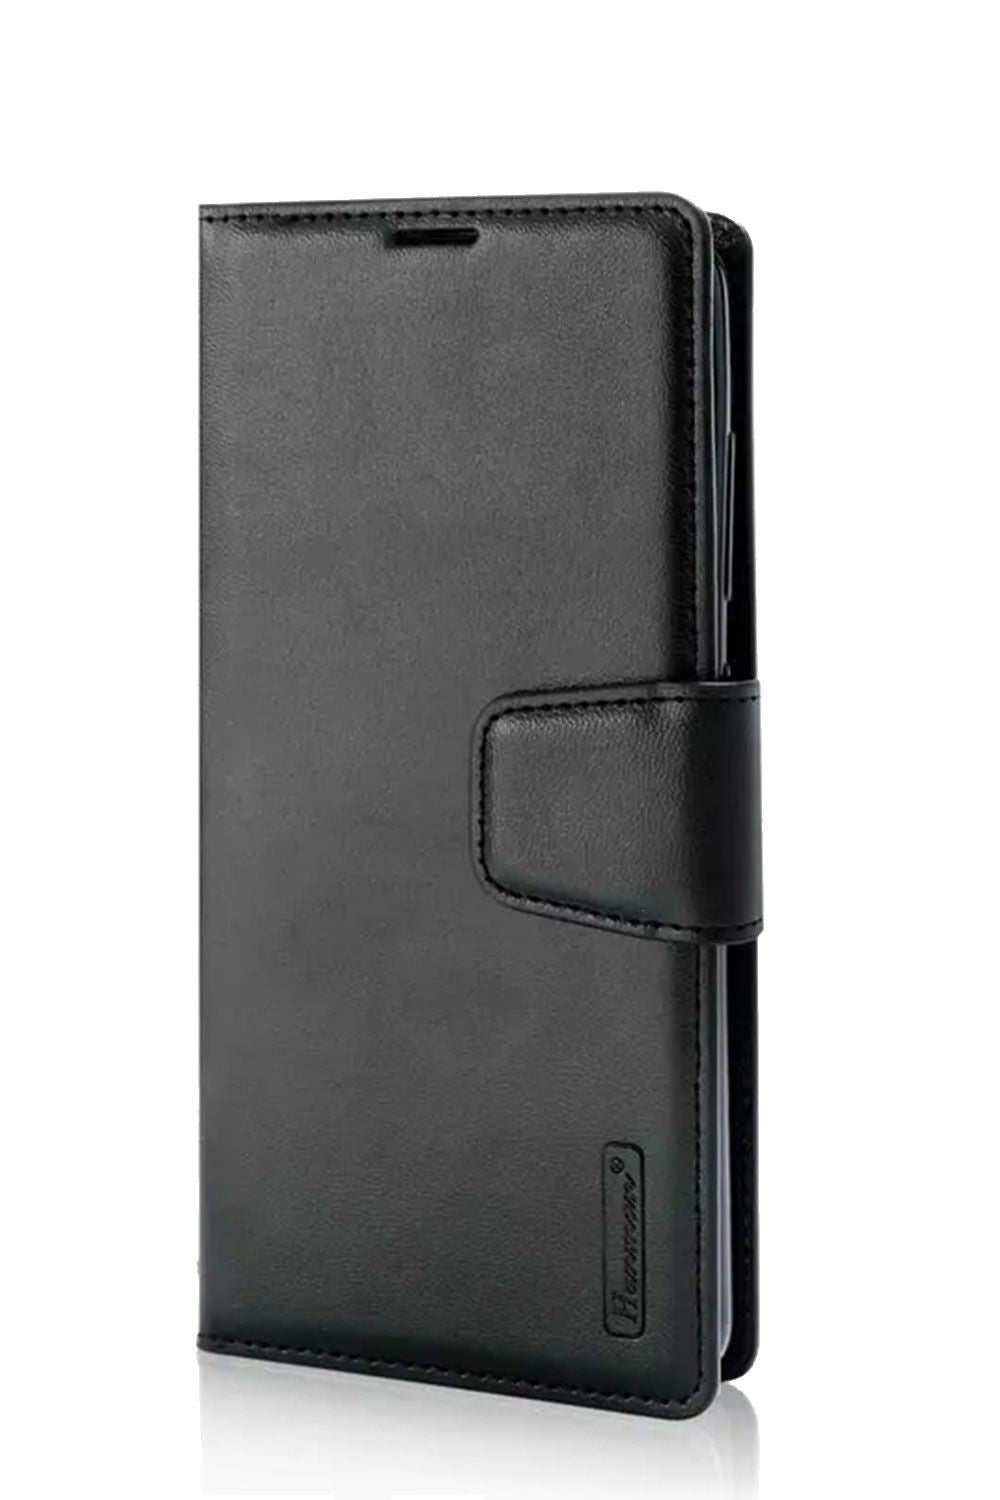 Hanman Samsung Galaxy A34 Premium Leather Wallet Flip Case with Card Slots